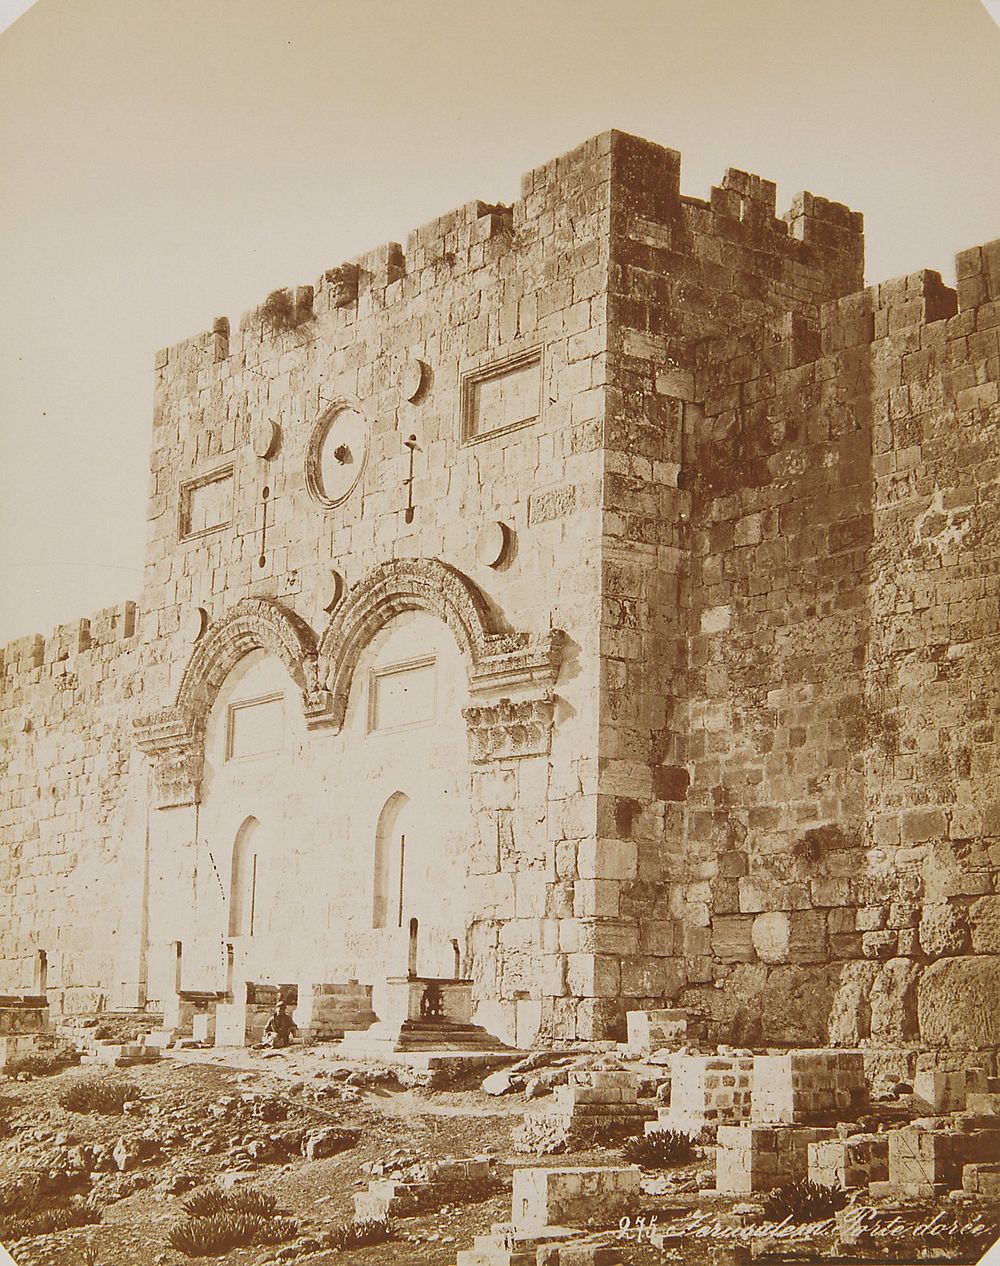 Porte dorée, Jerusalem. Original from the Minneapolis Institute of Art.